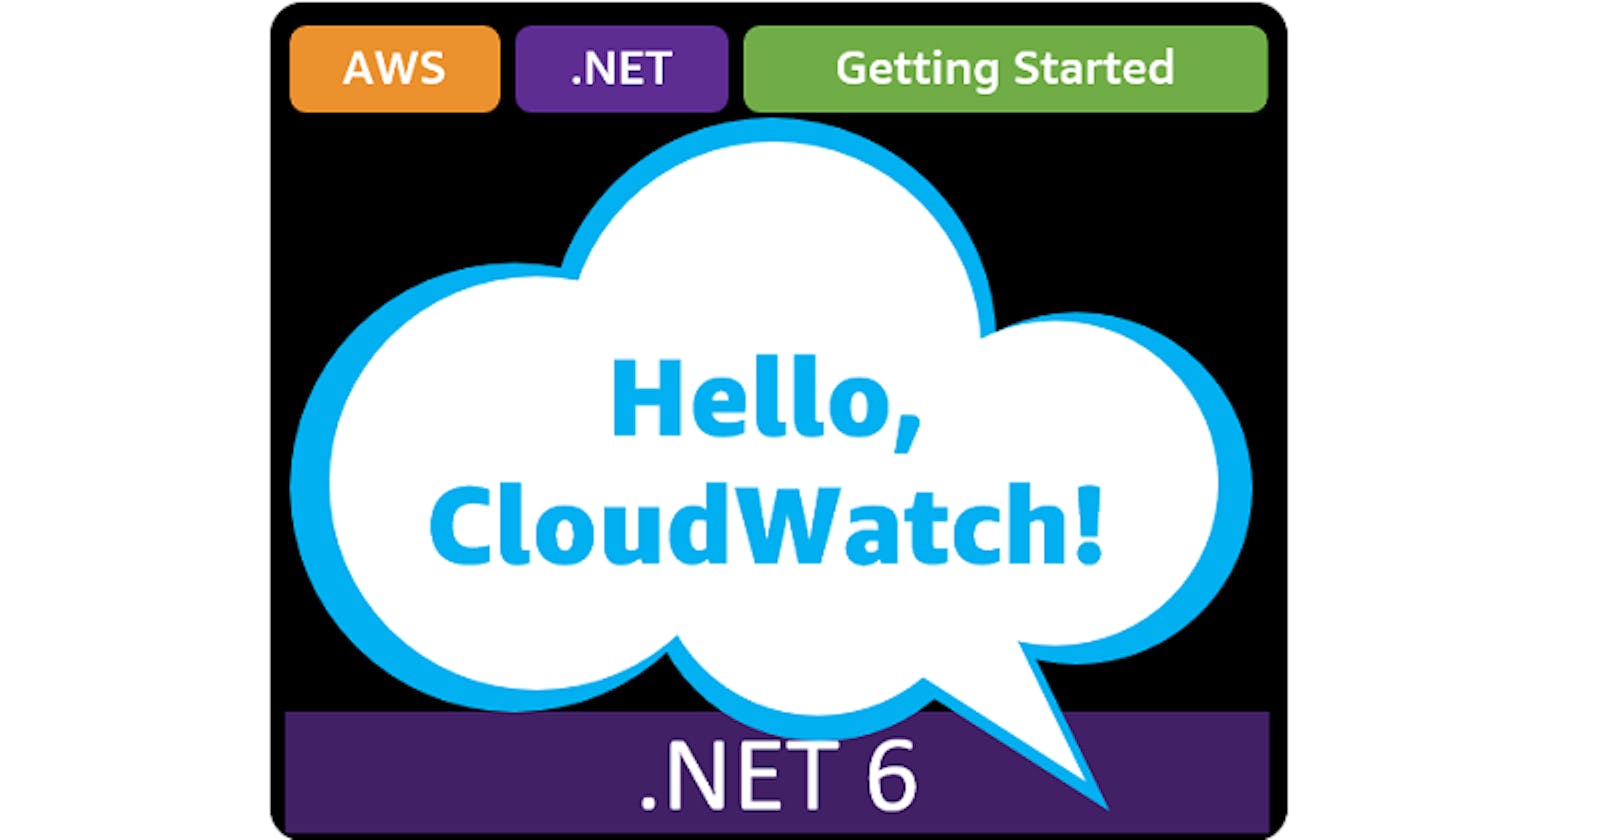 Hello, CloudWatch!